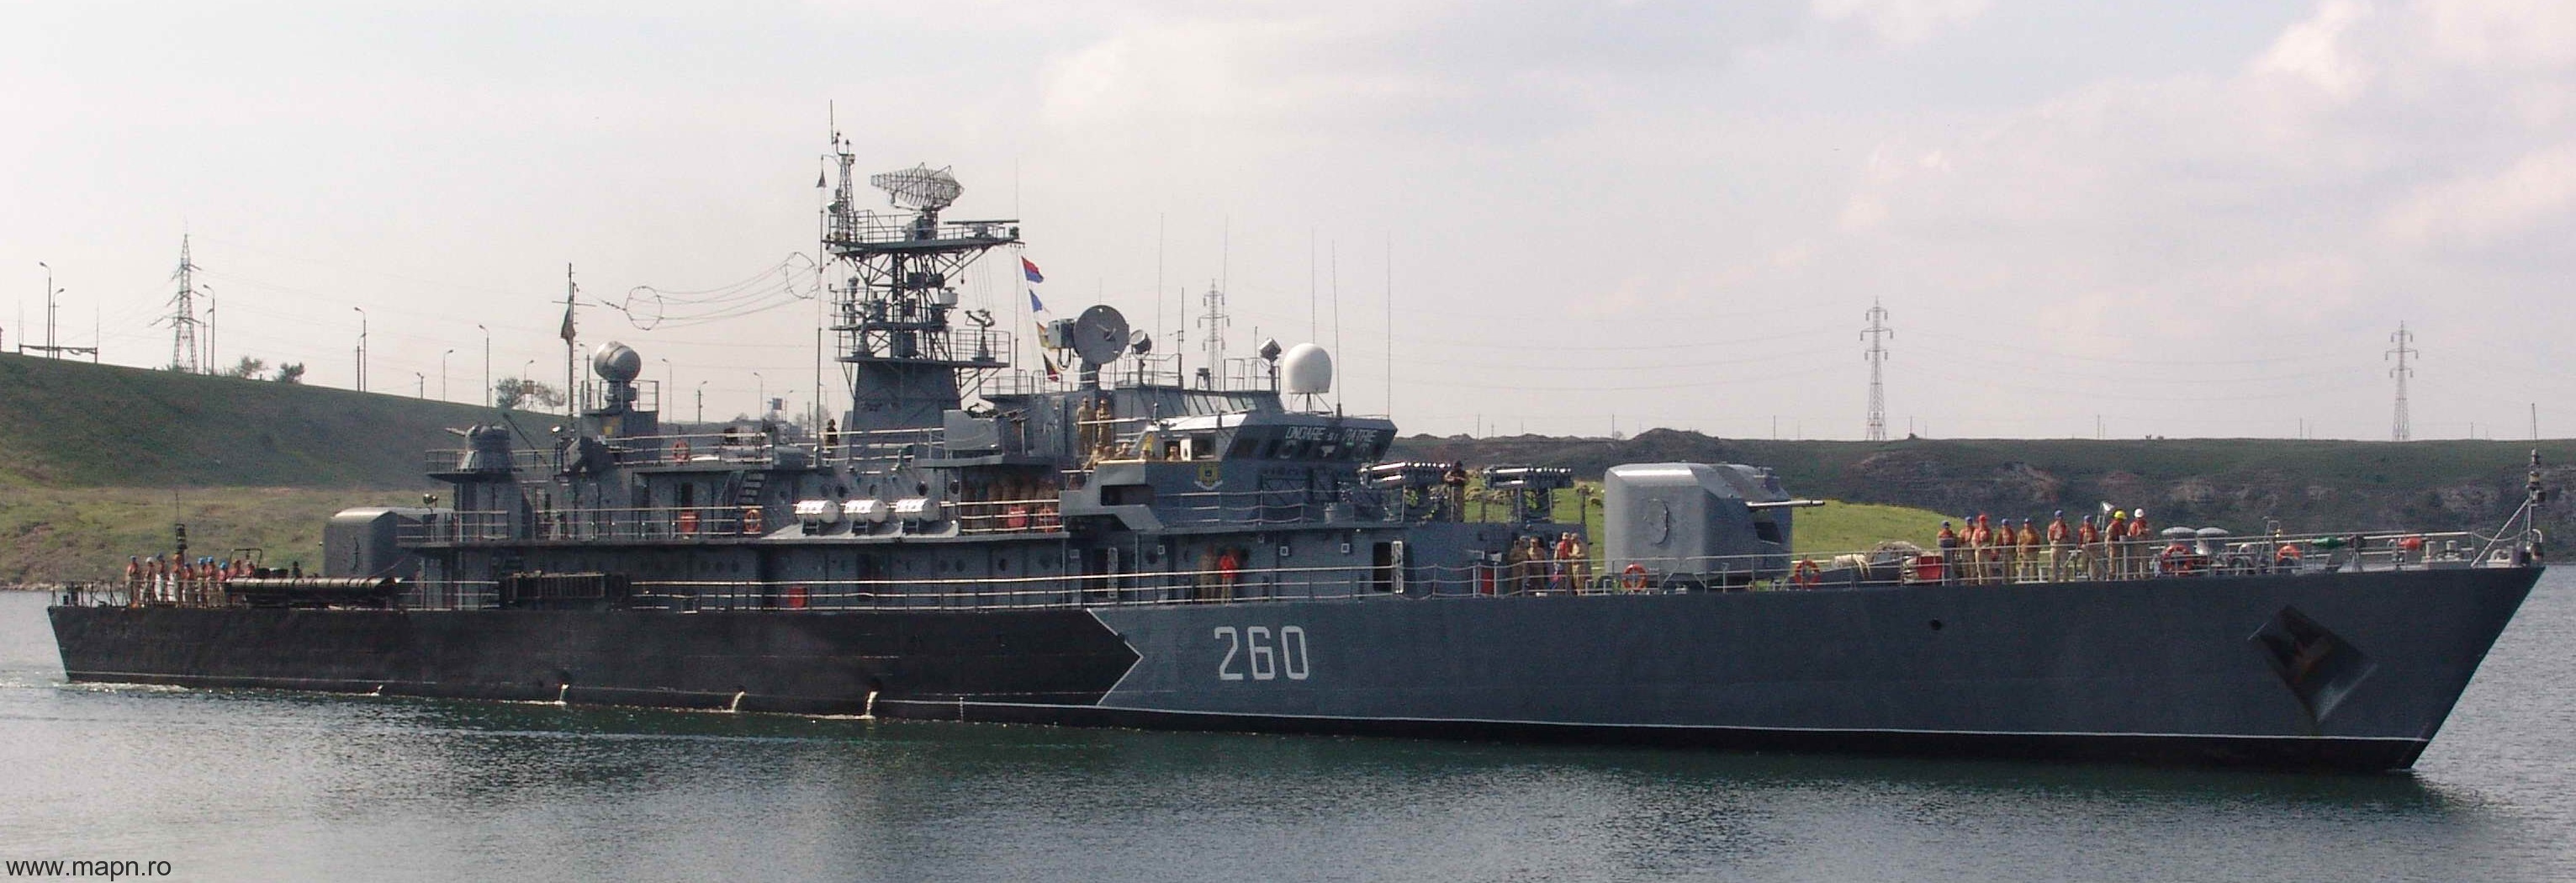 f-260 amiral petre barbuneanu tetal-i class corvette romanian navy 02